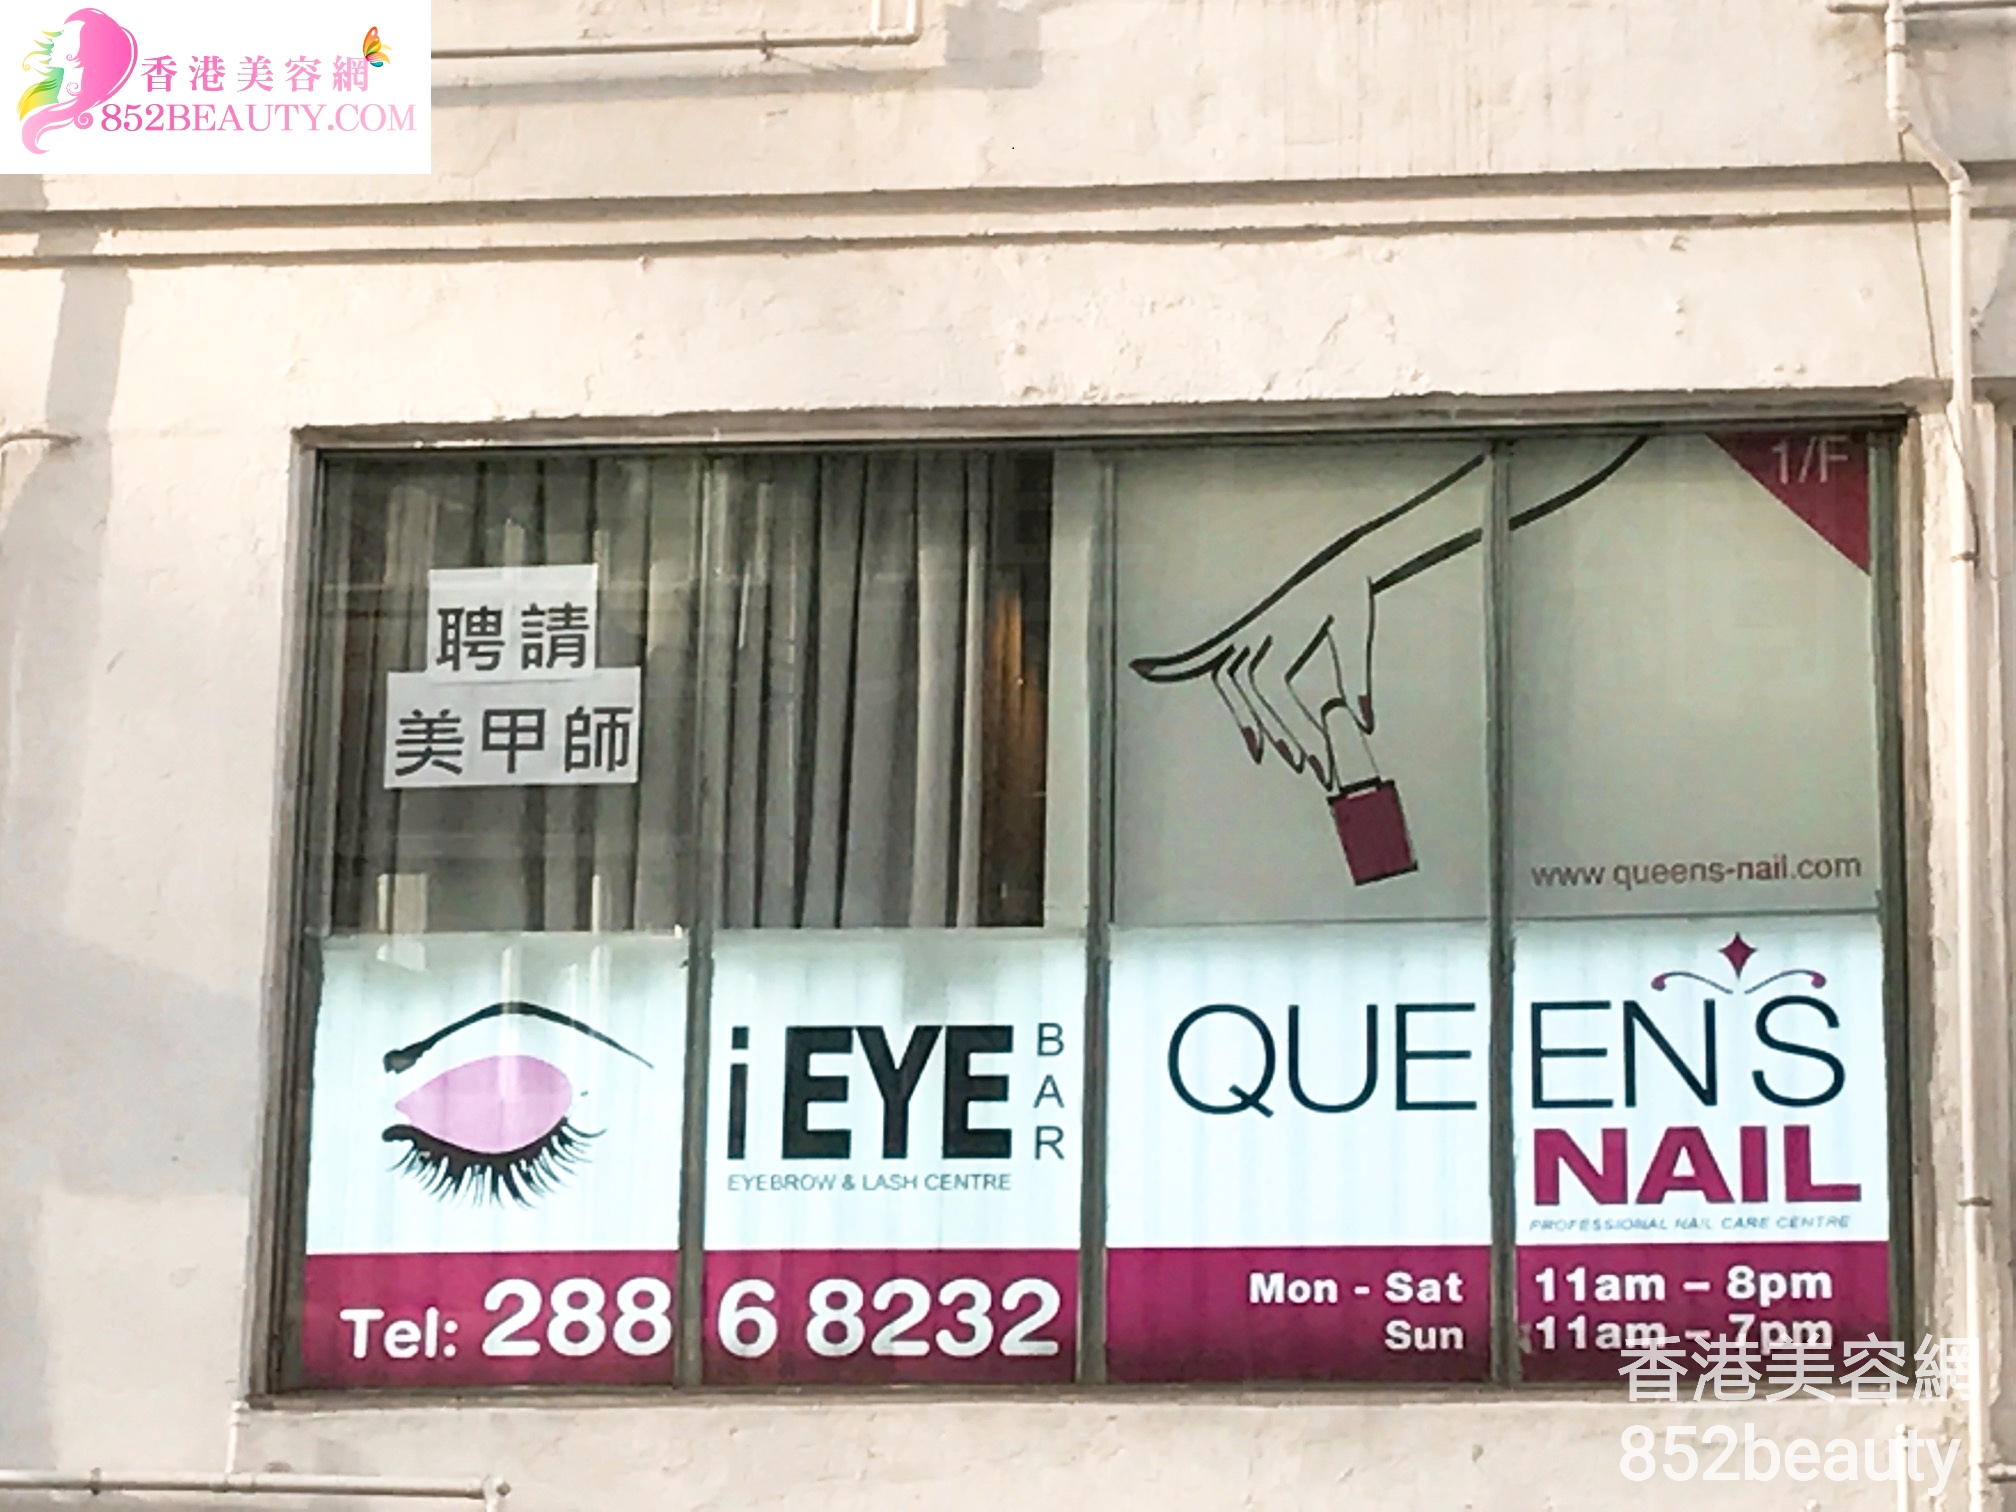 香港美容網 Hong Kong Beauty Salon 美容院 / 美容師: iEye Bar - Queen's Nail